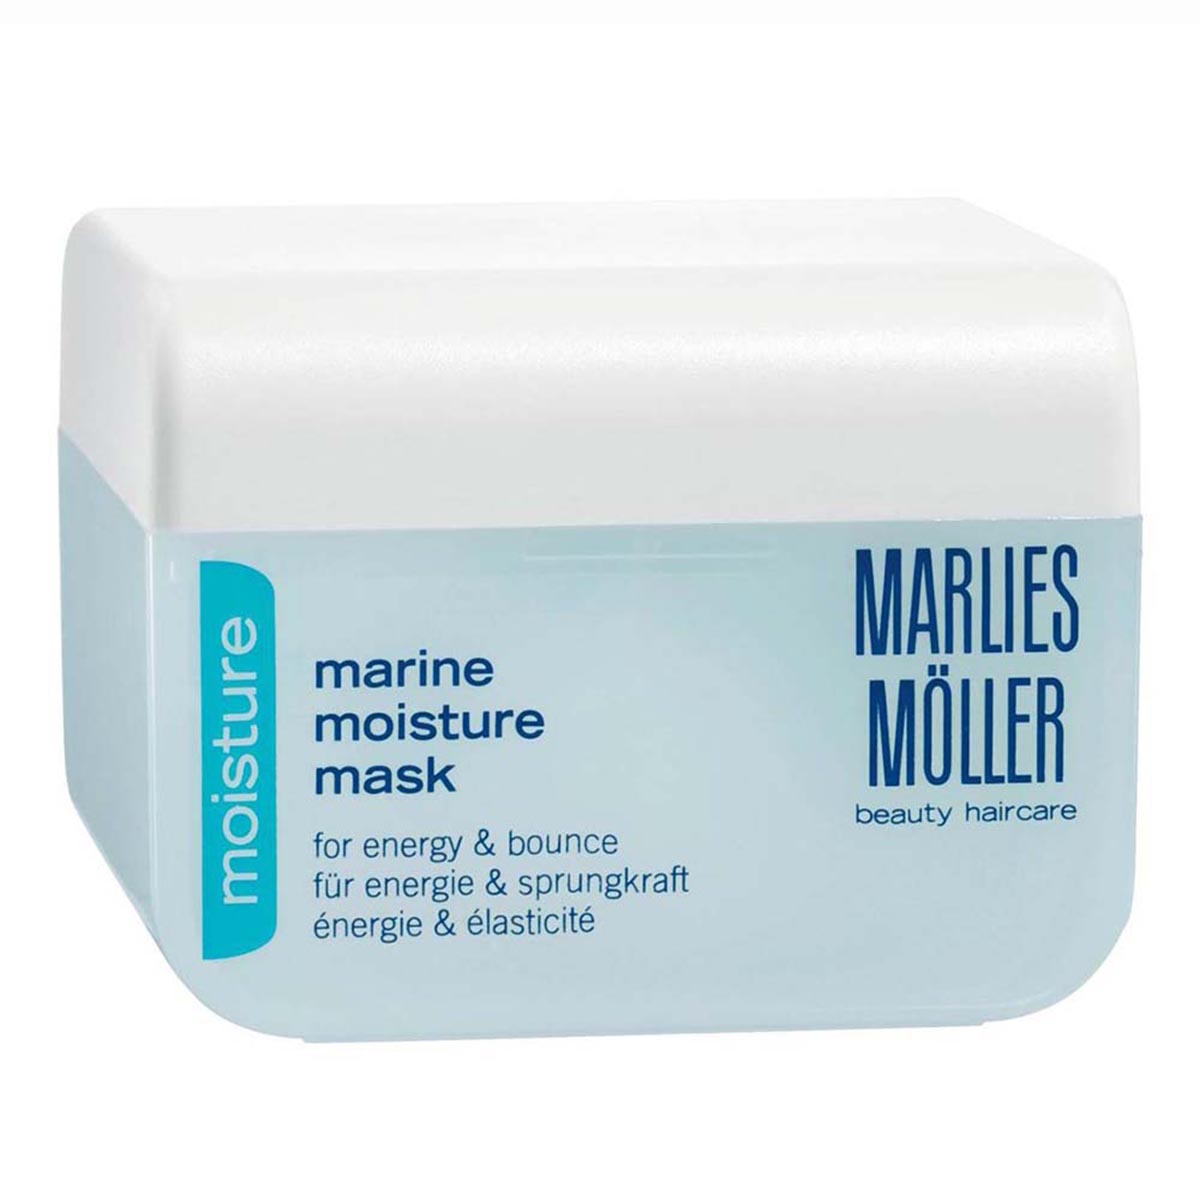 farmacialoreto marlies moller moisture marine mask 30ml uomo